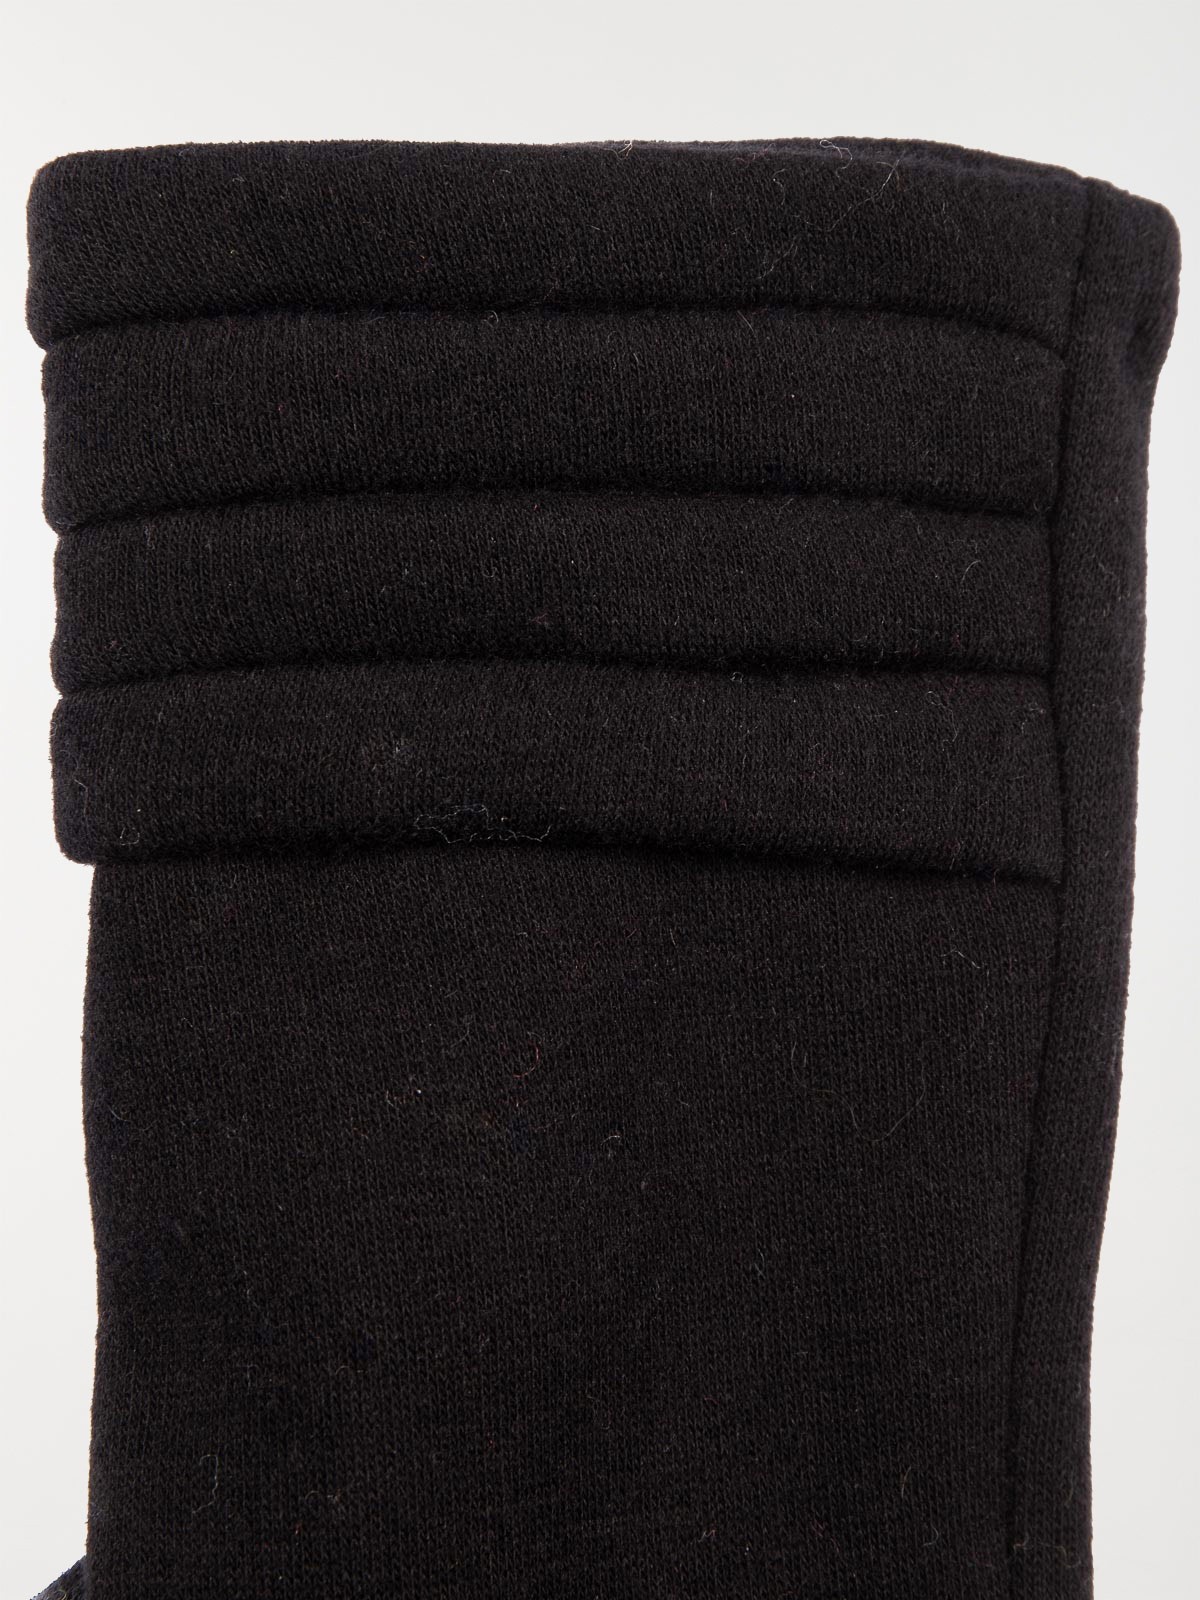 Gants noirs tactile femme - DistriCenter